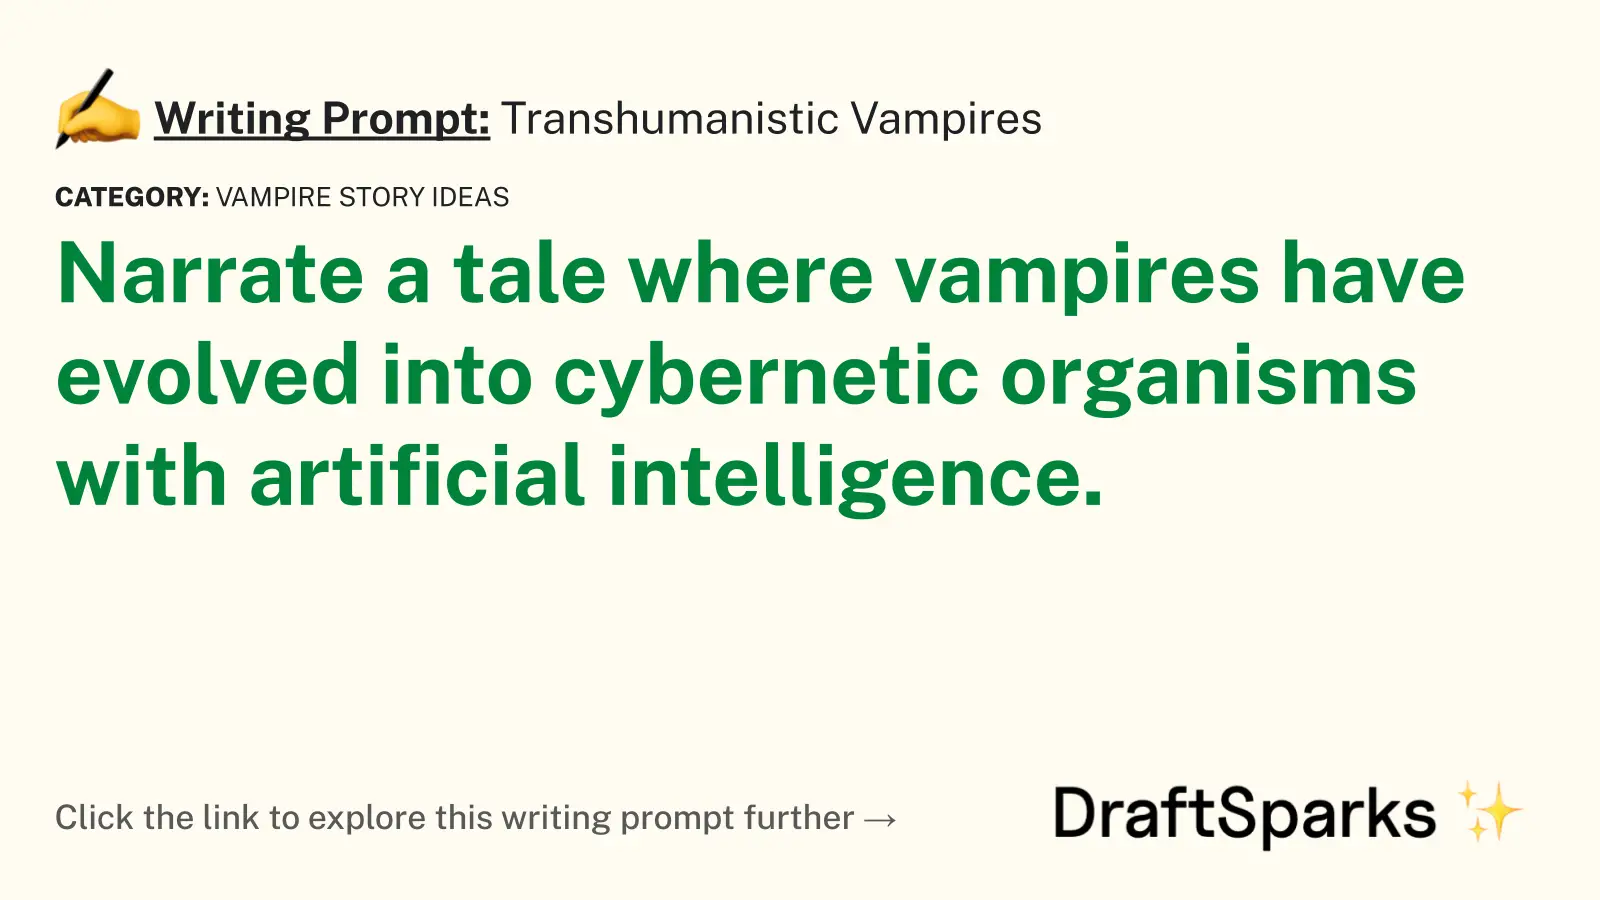 Transhumanistic Vampires